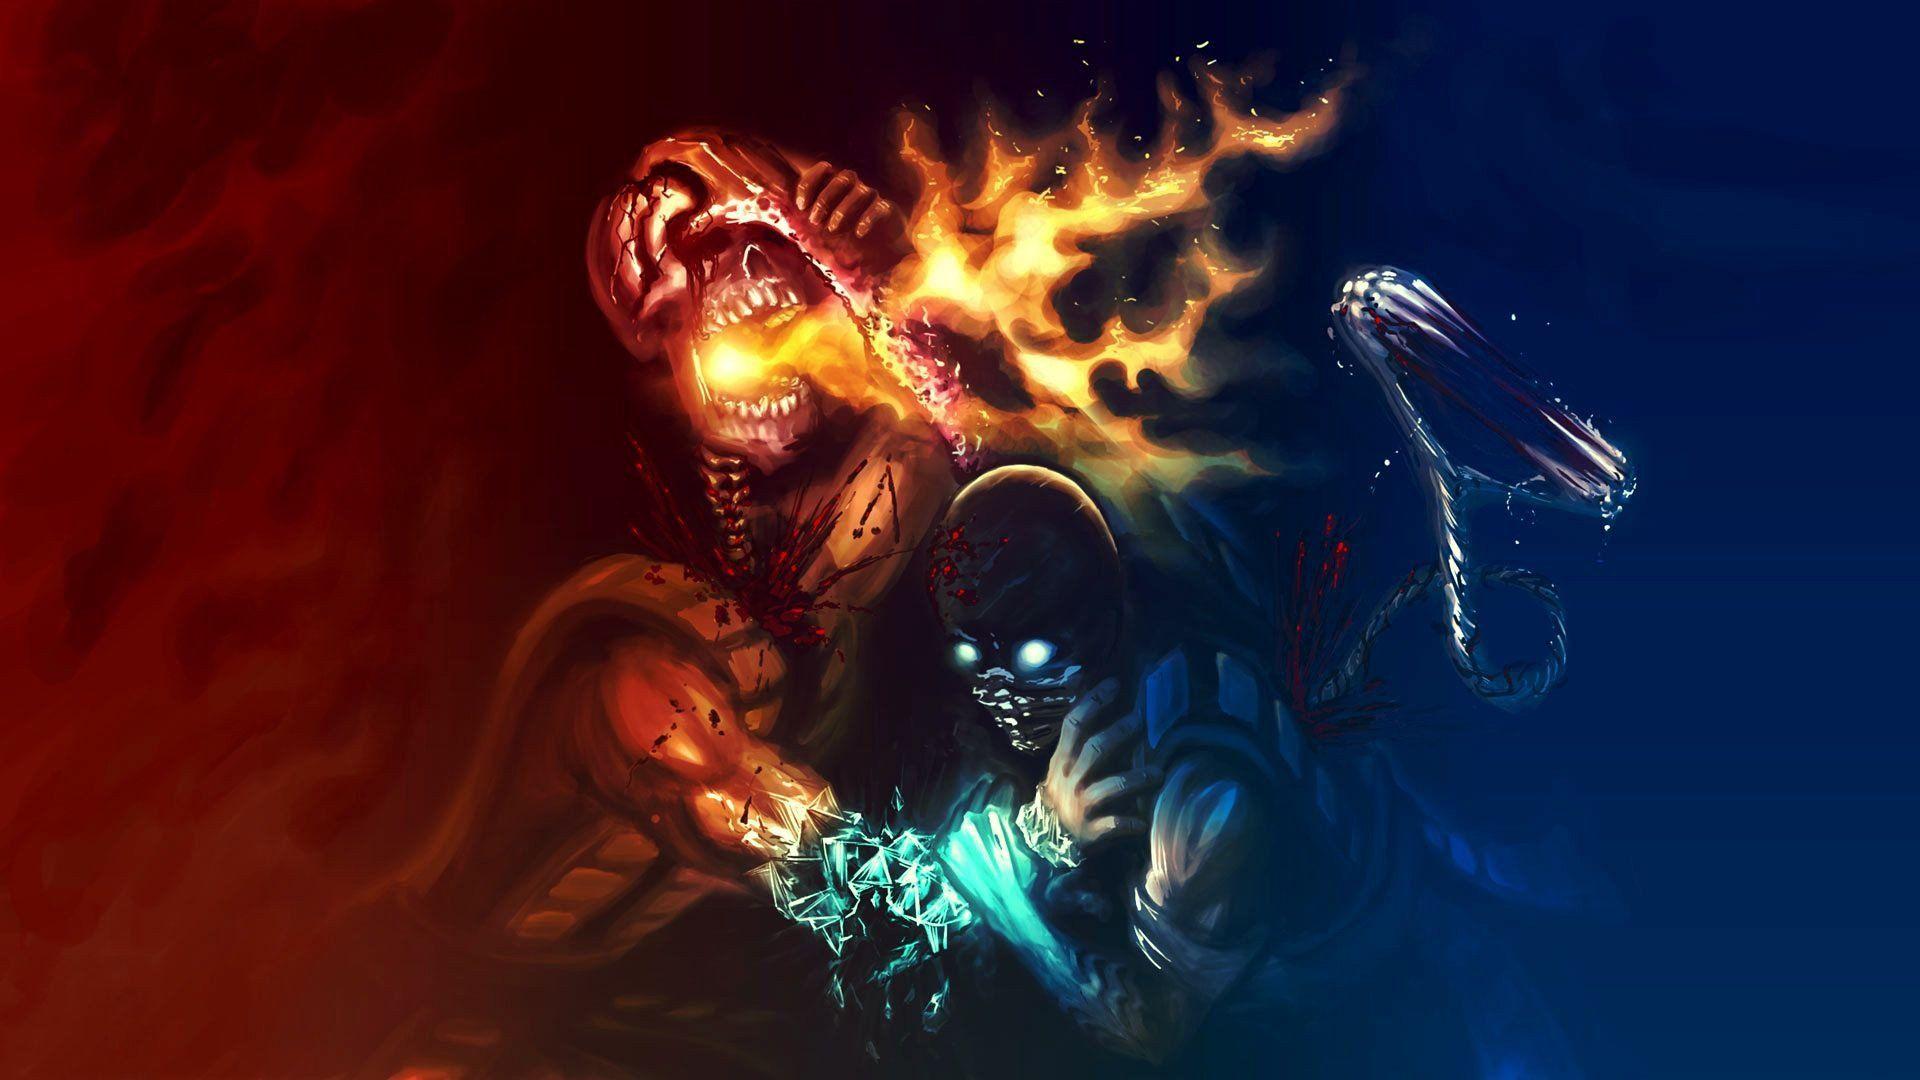 Sub Zero (Mortal Kombat) HD Wallpaper And Background Image